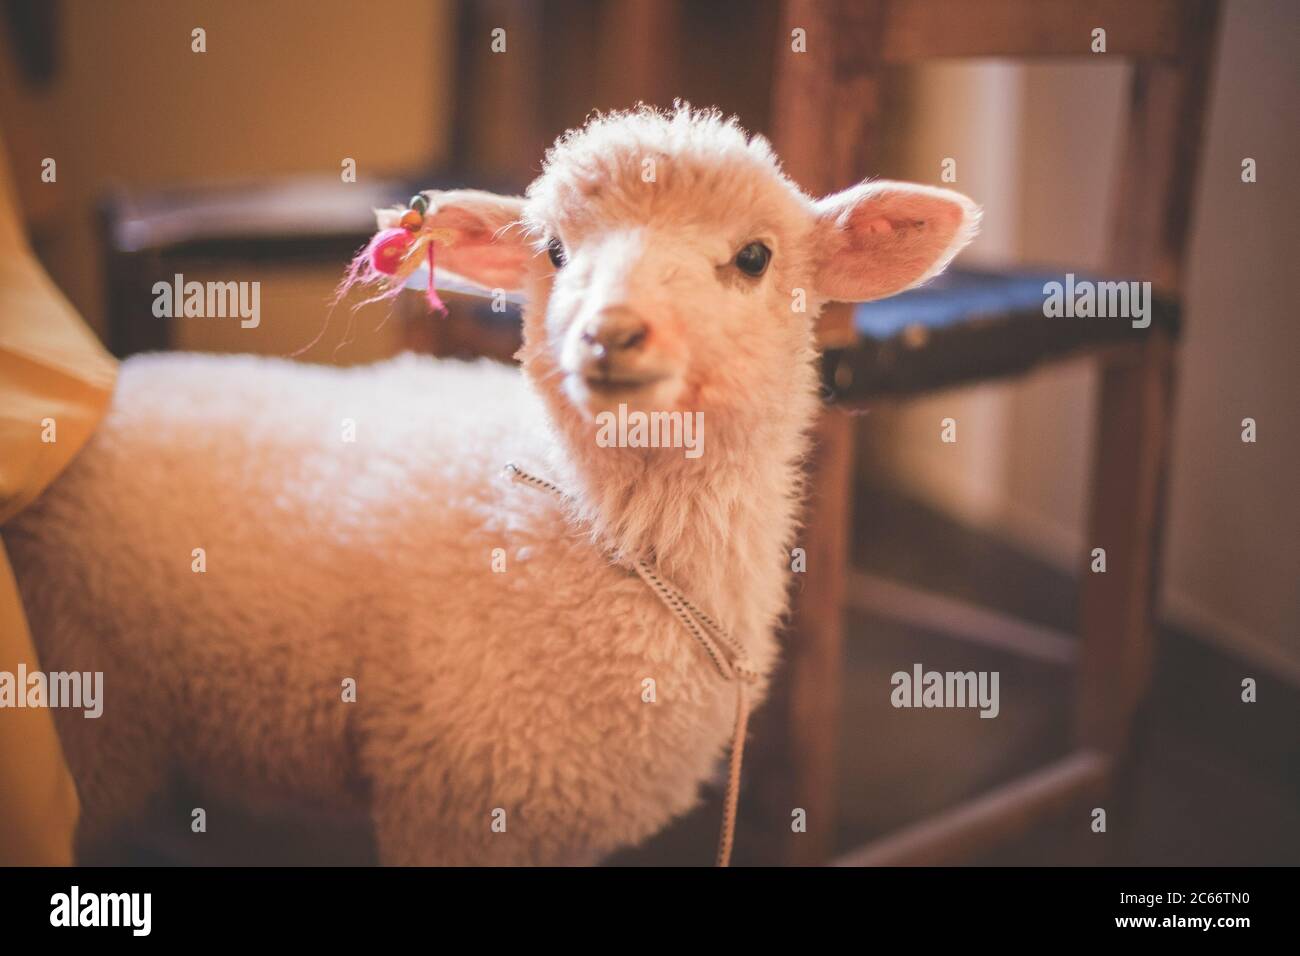 curious baby sheep Stock Photo